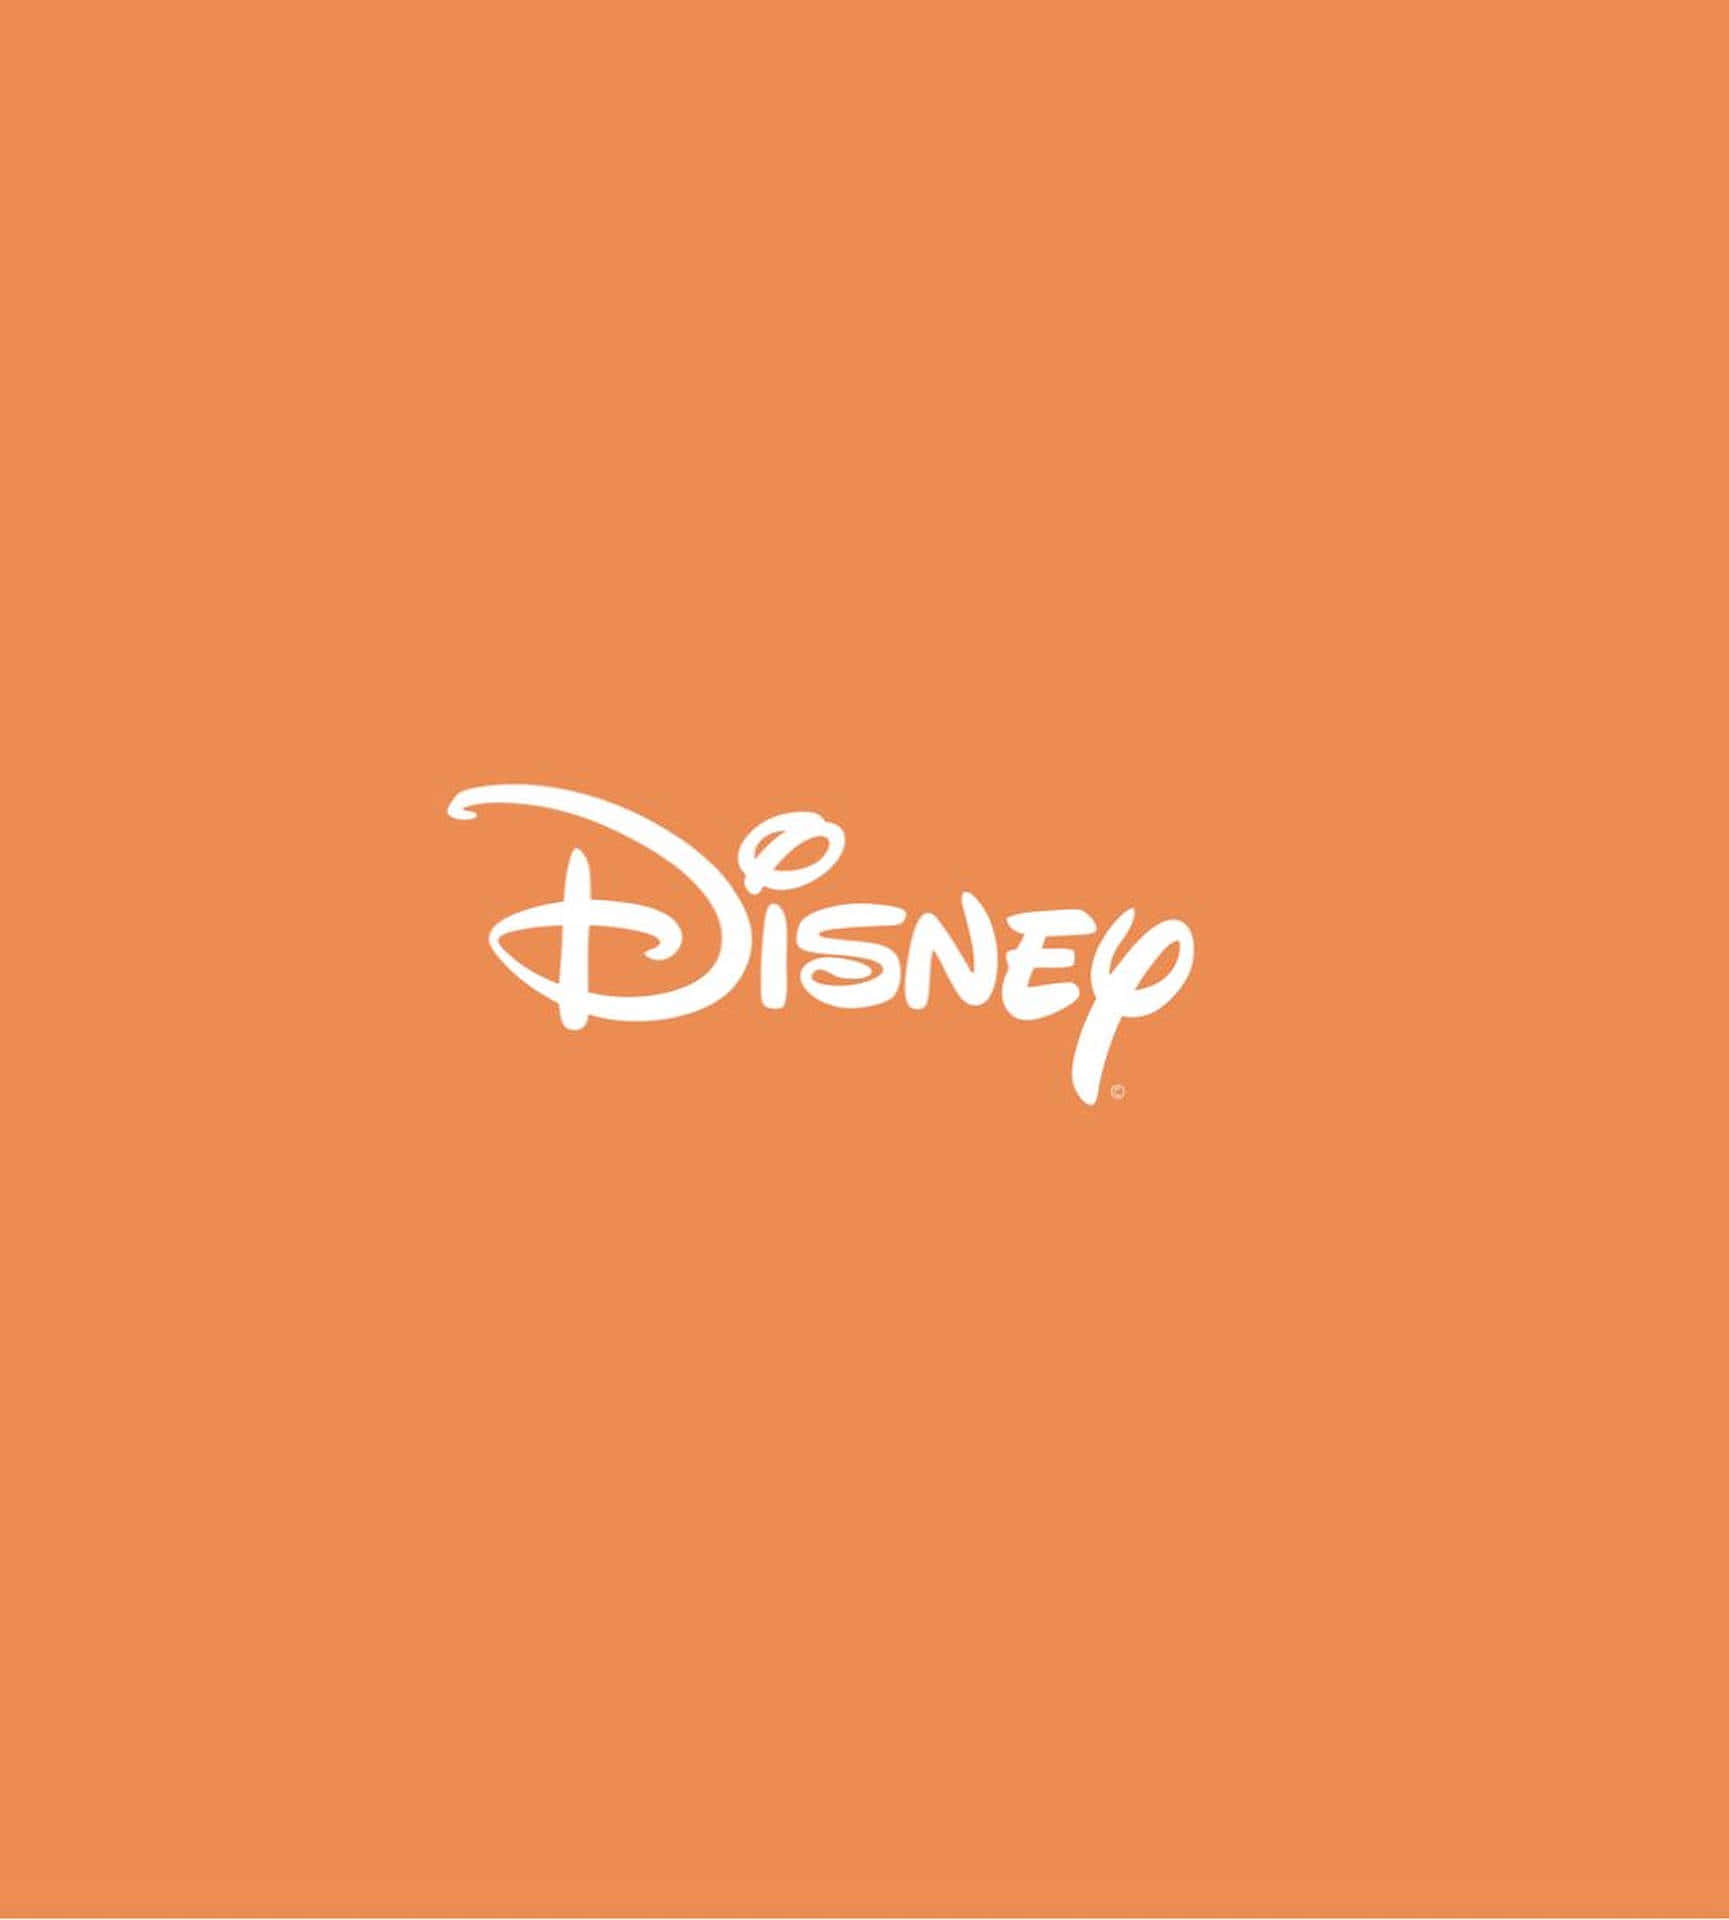 Disneylogo På En Orange Baggrund. Wallpaper